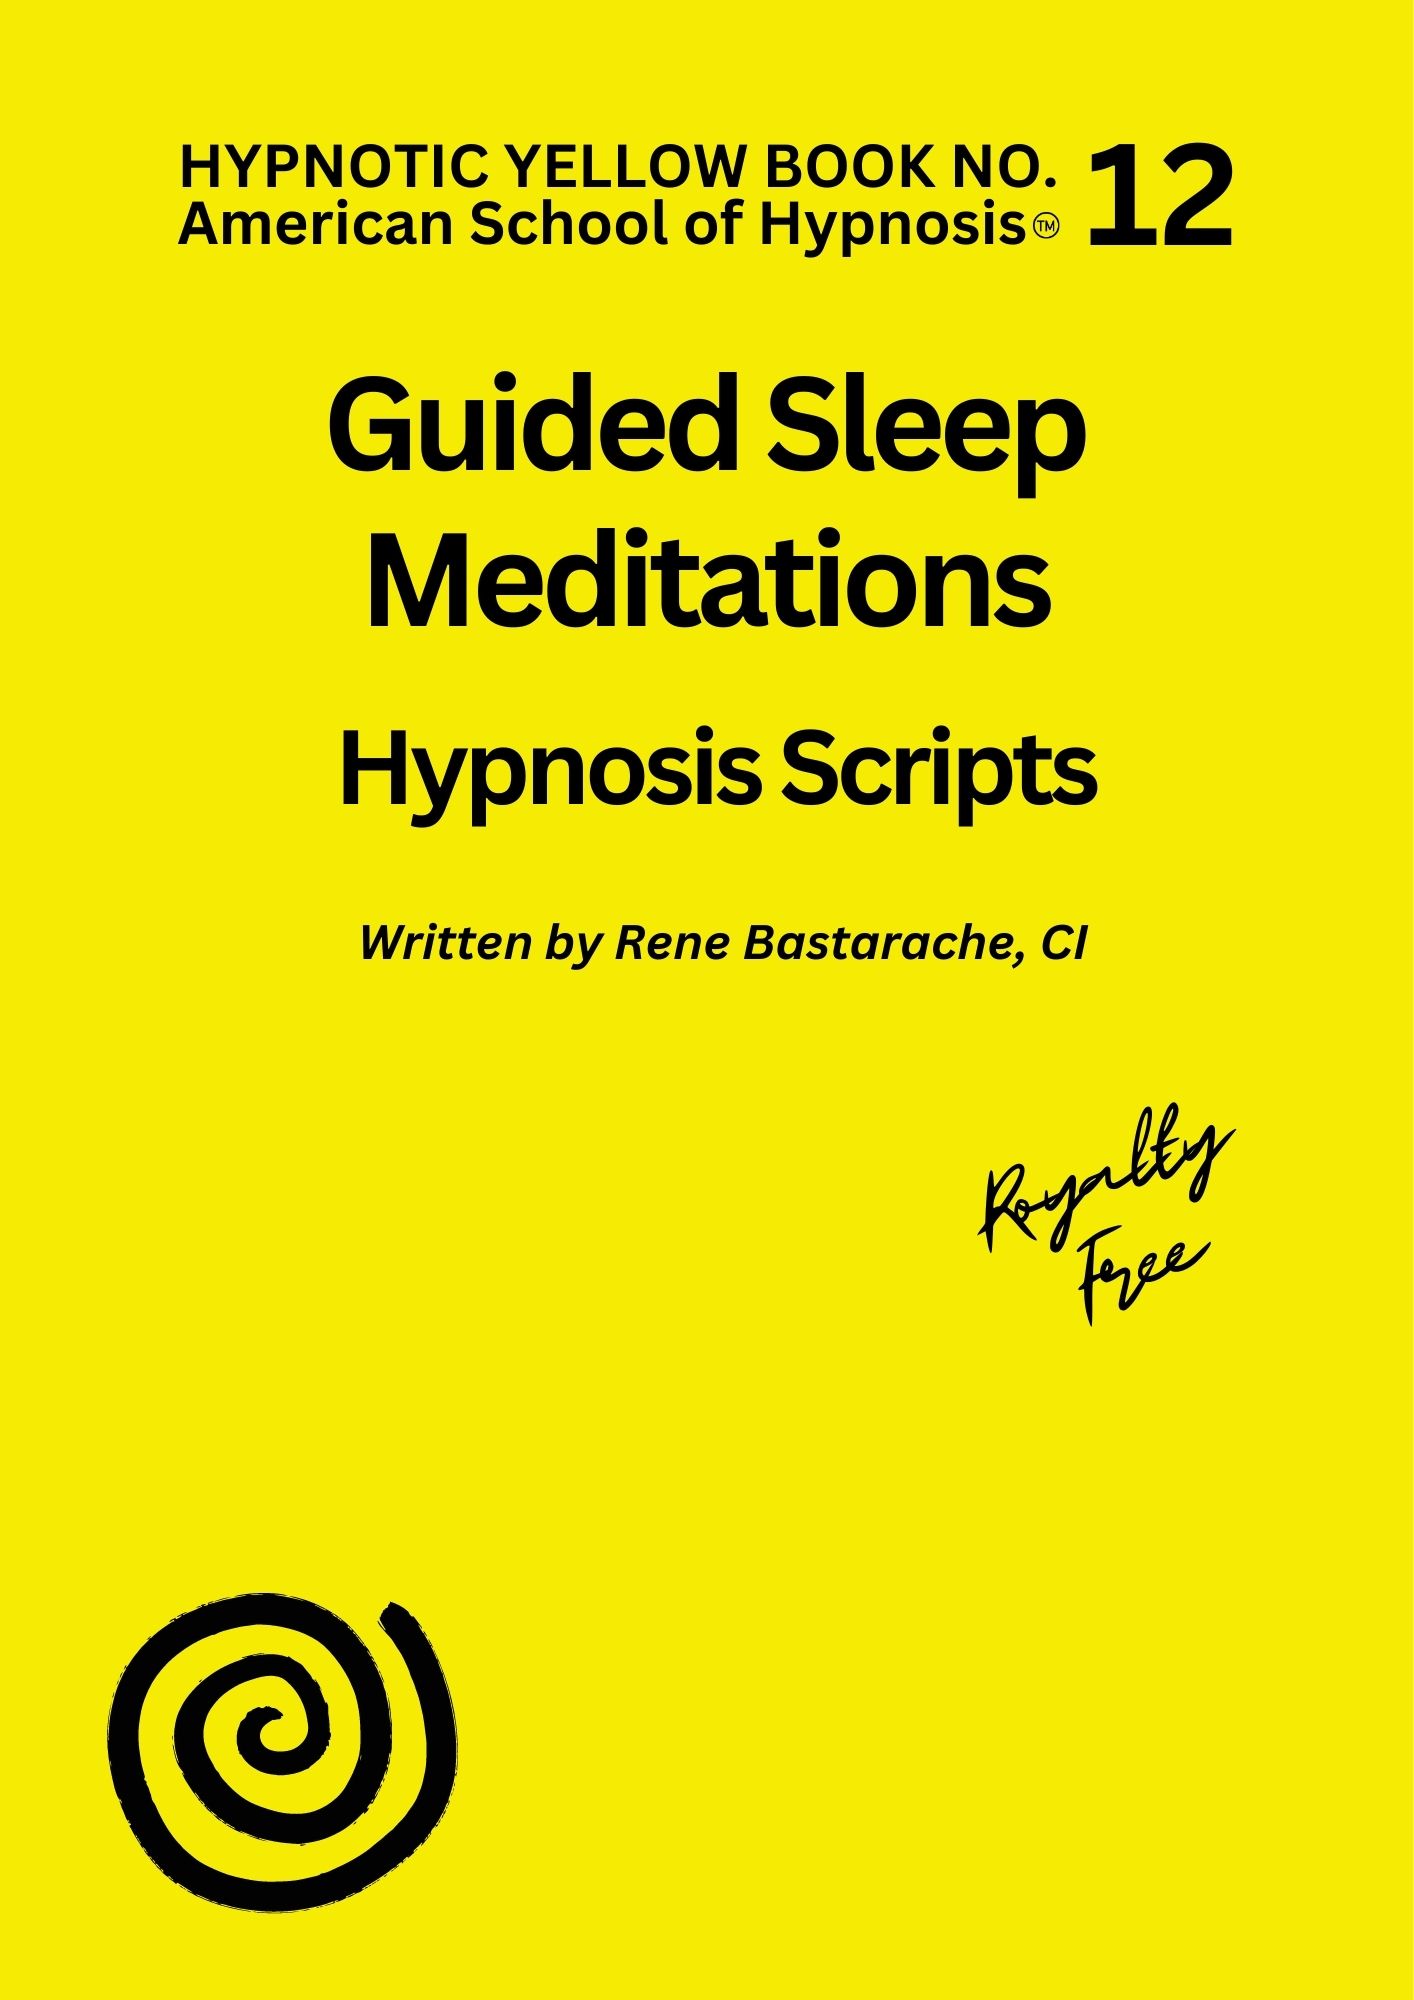 Guided Sleep Meditation Scripts | American School of Hypnosis